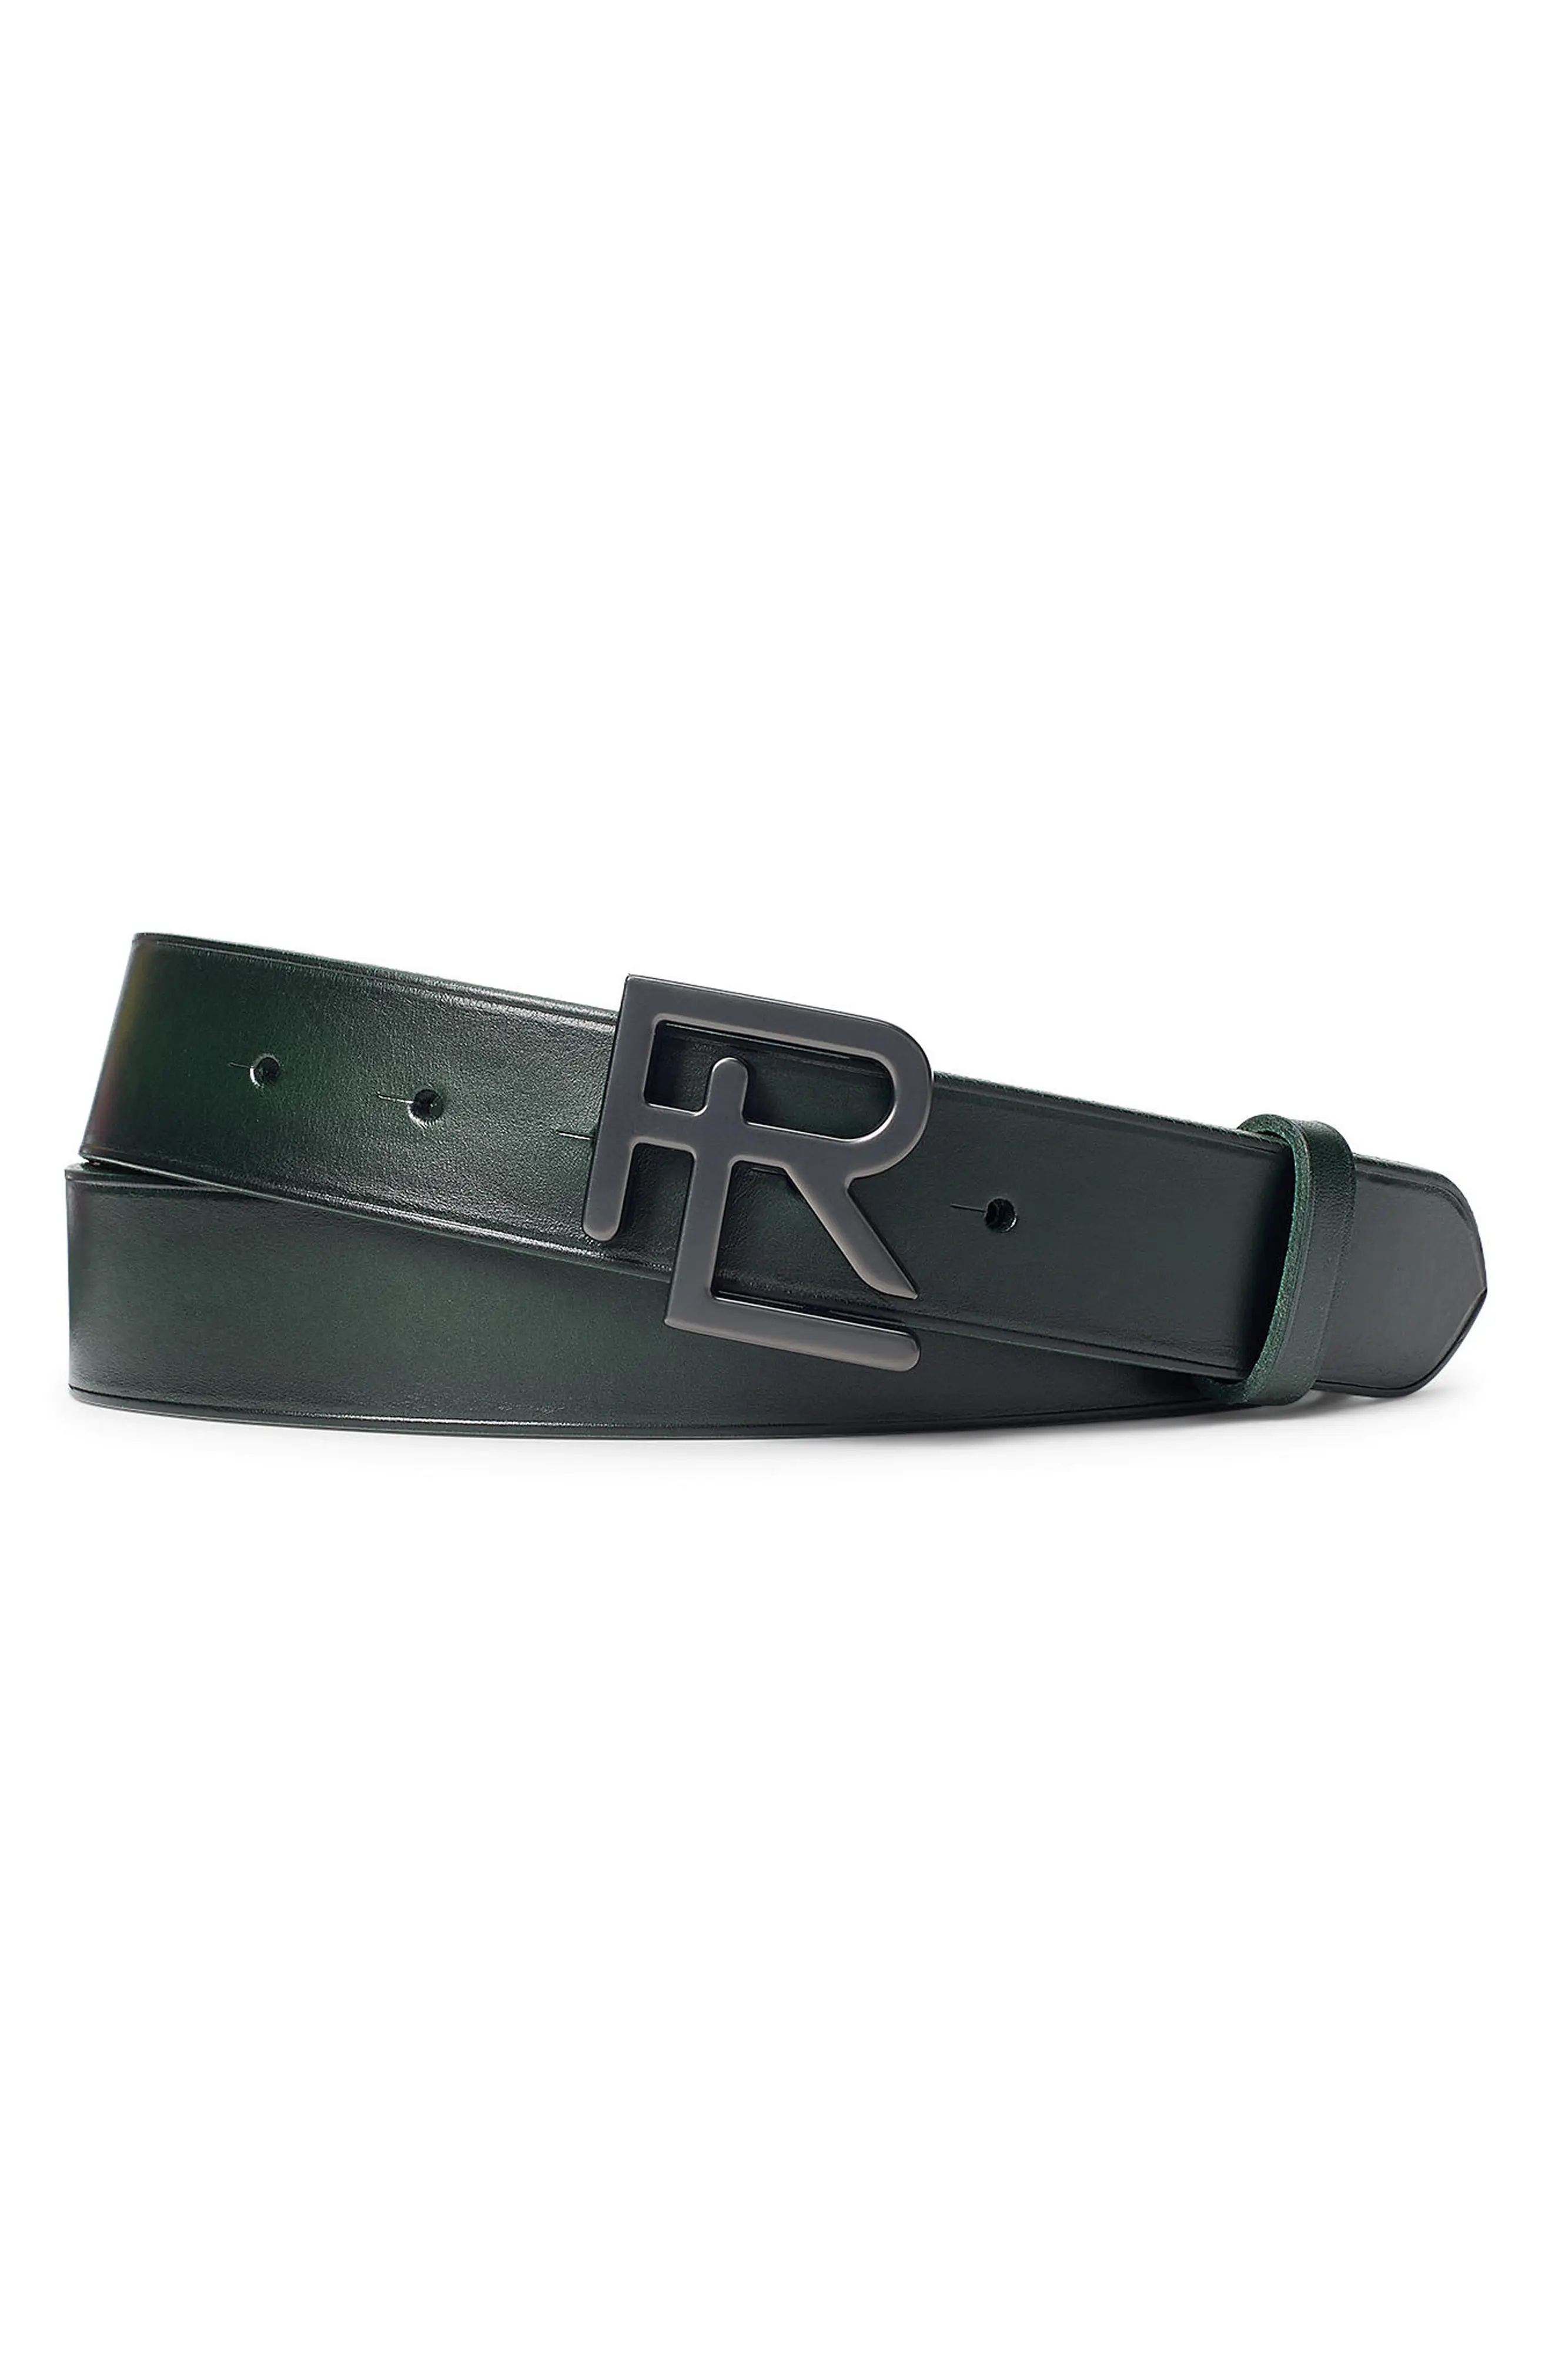 RL Buckle Leather Belt - 1